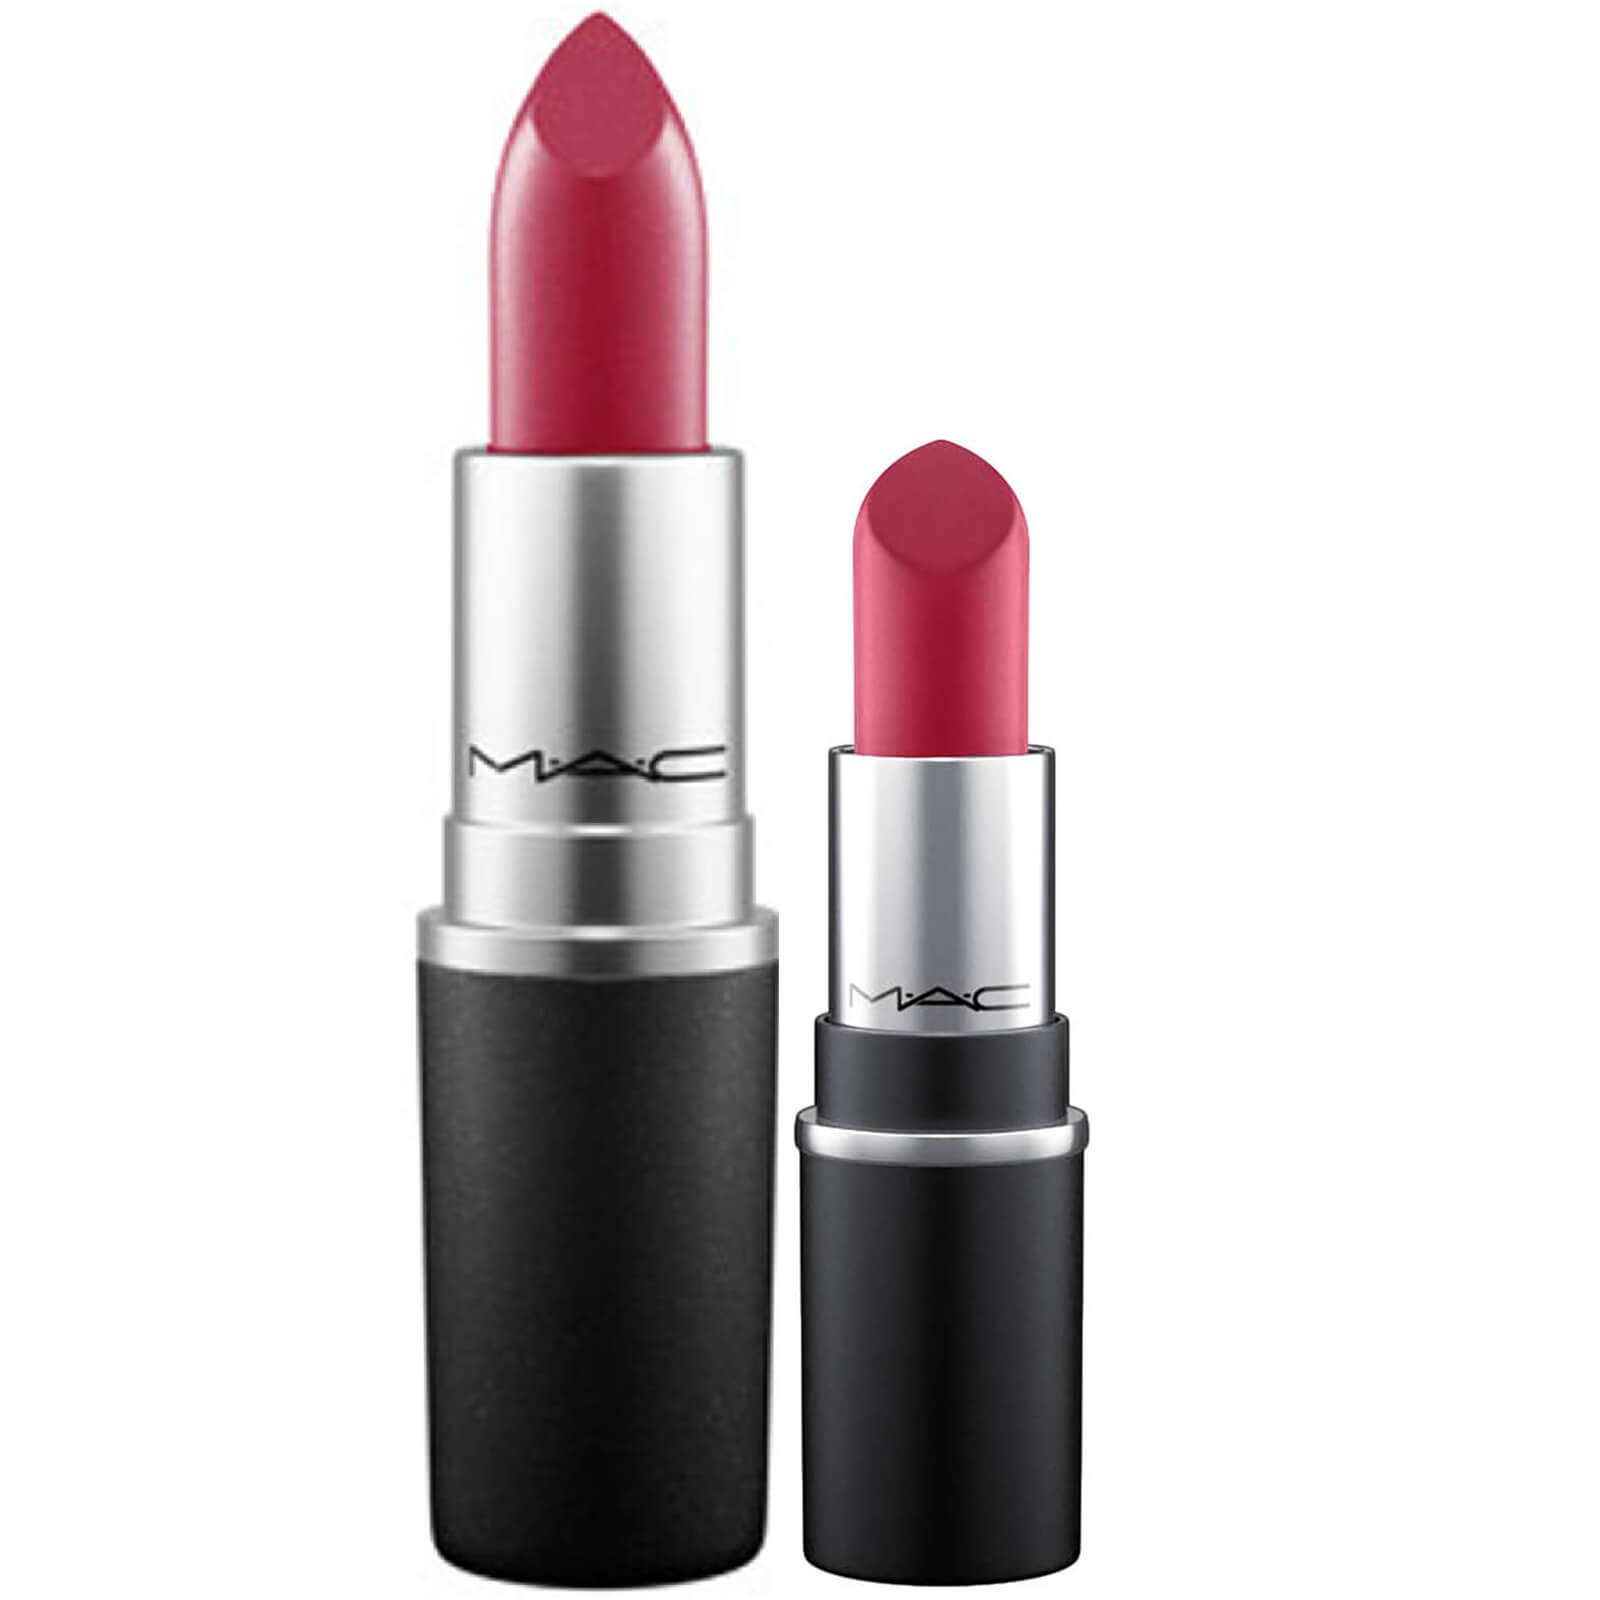 Mac D For Danger Lipstick Bundle Lookfantastic